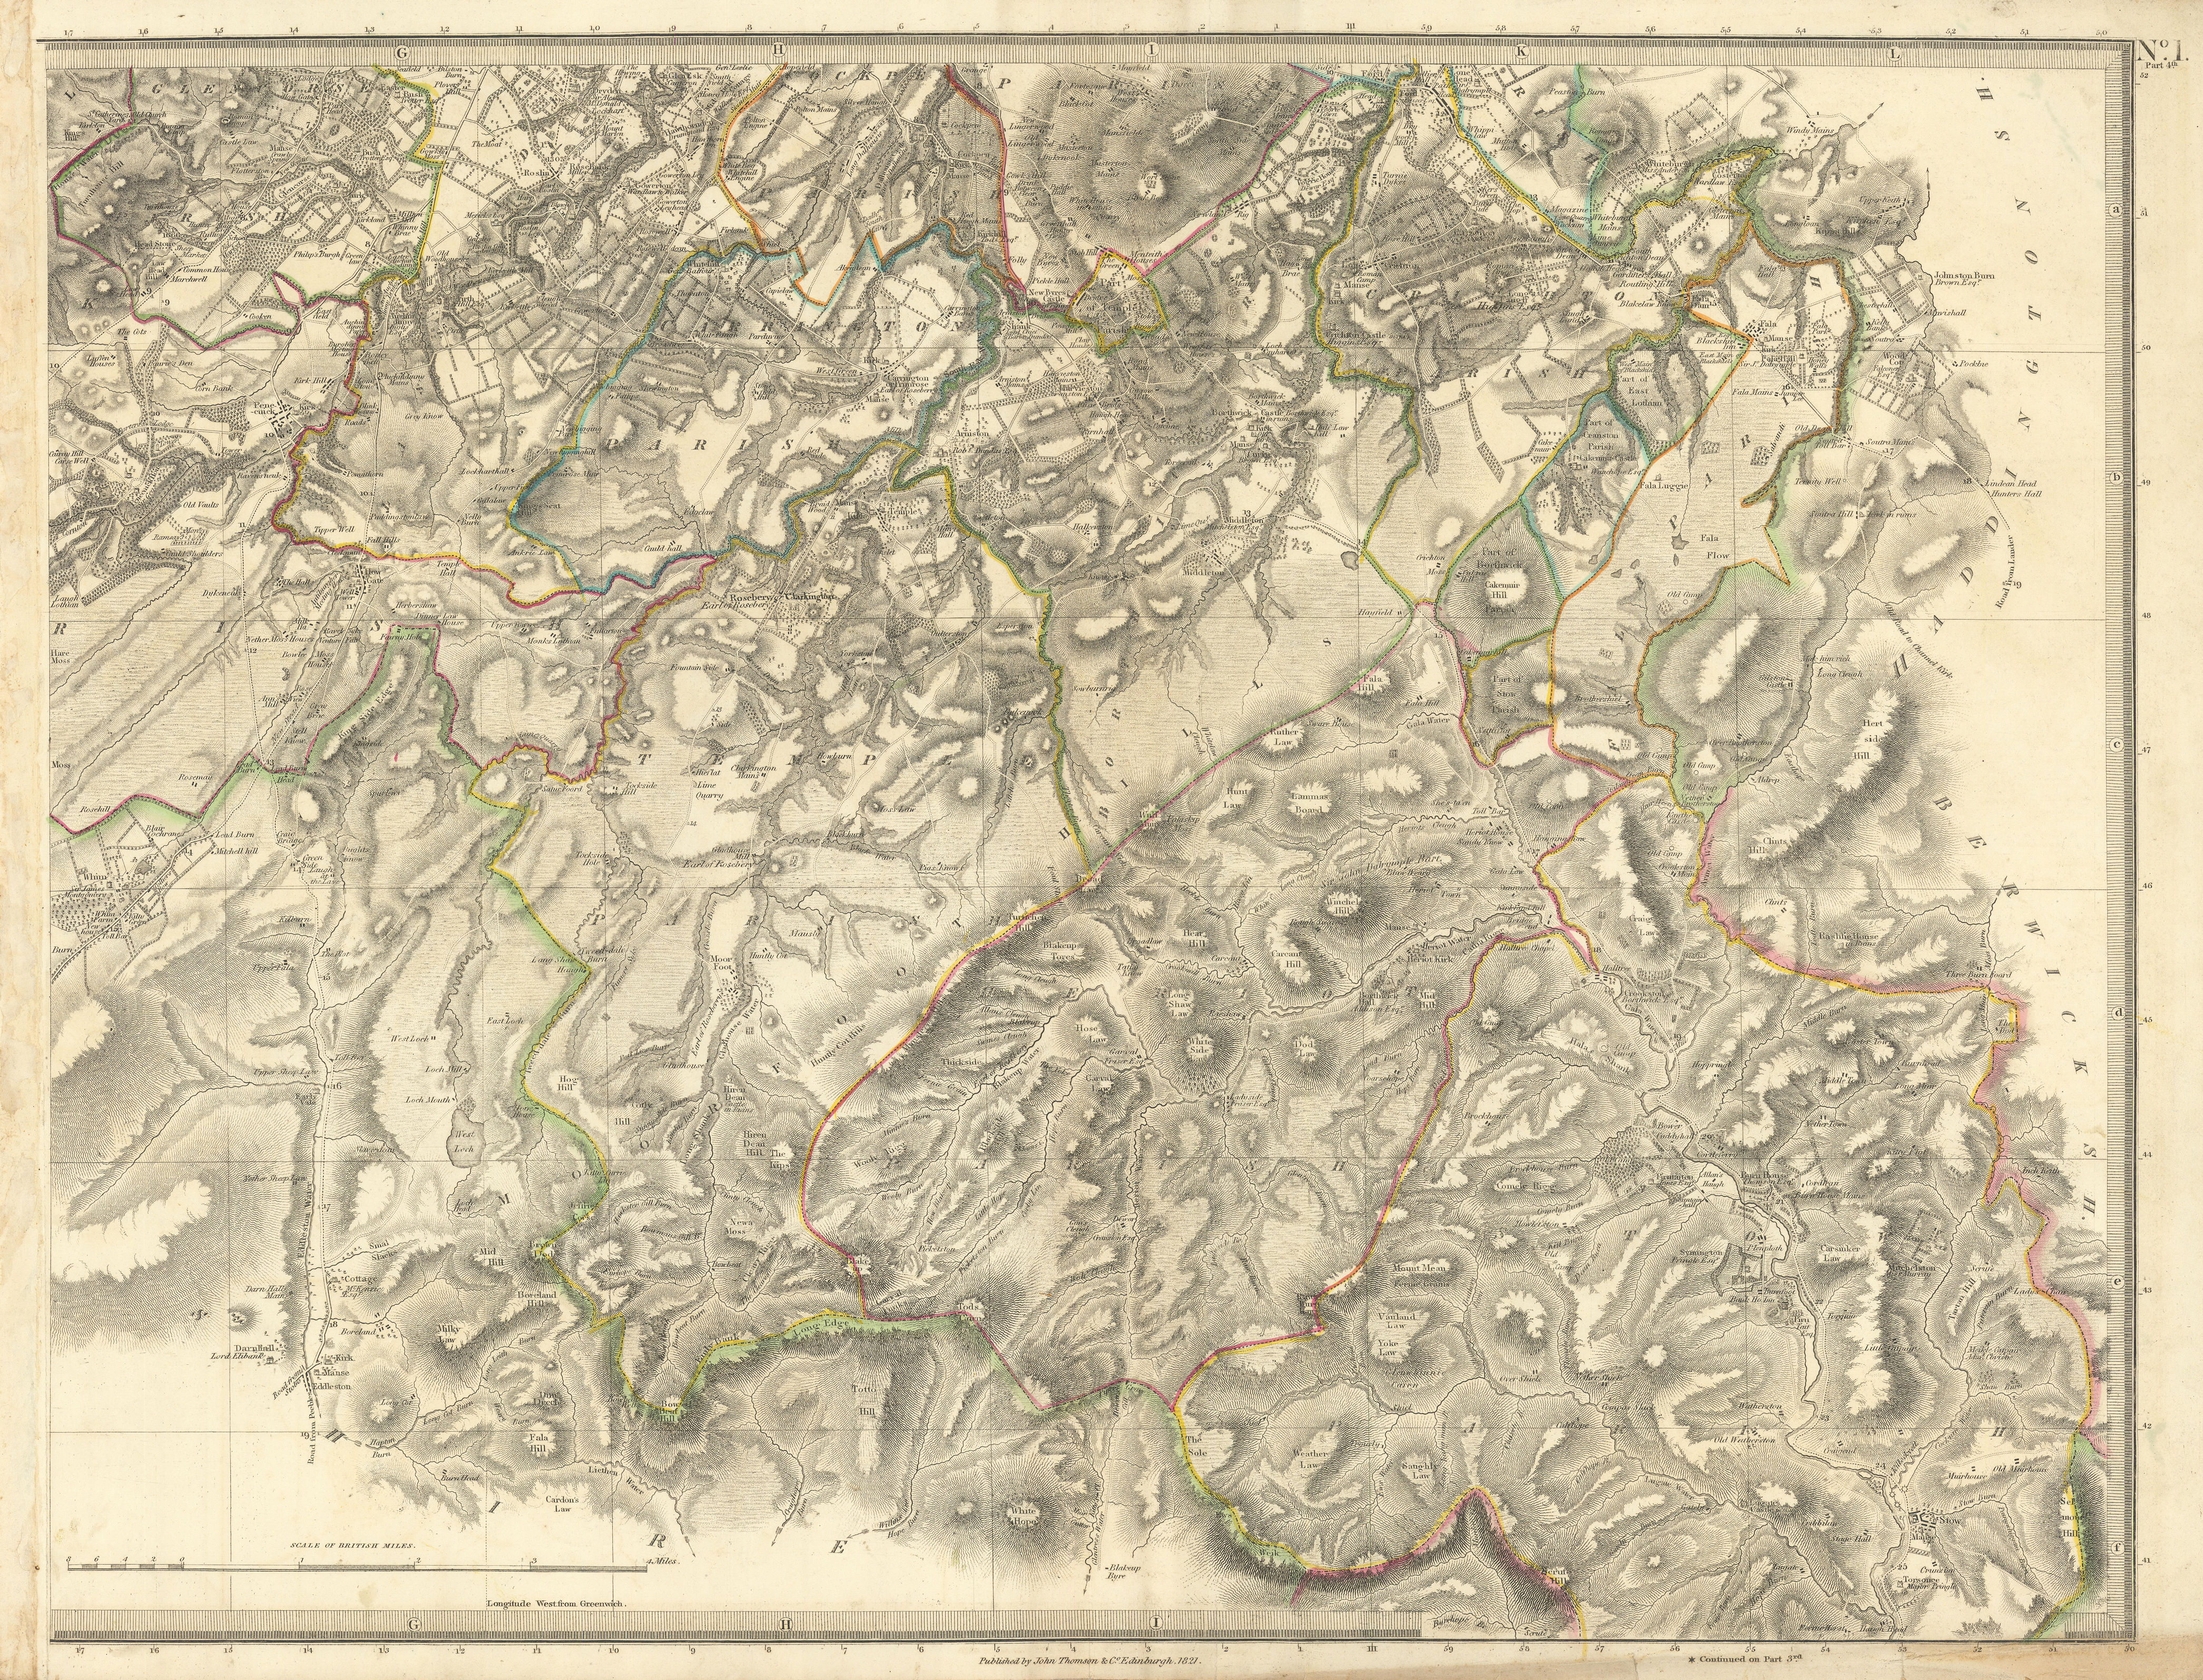 Edinburghshire south-east sheet. Midlothian. Penicuik. THOMSON 1832 old map